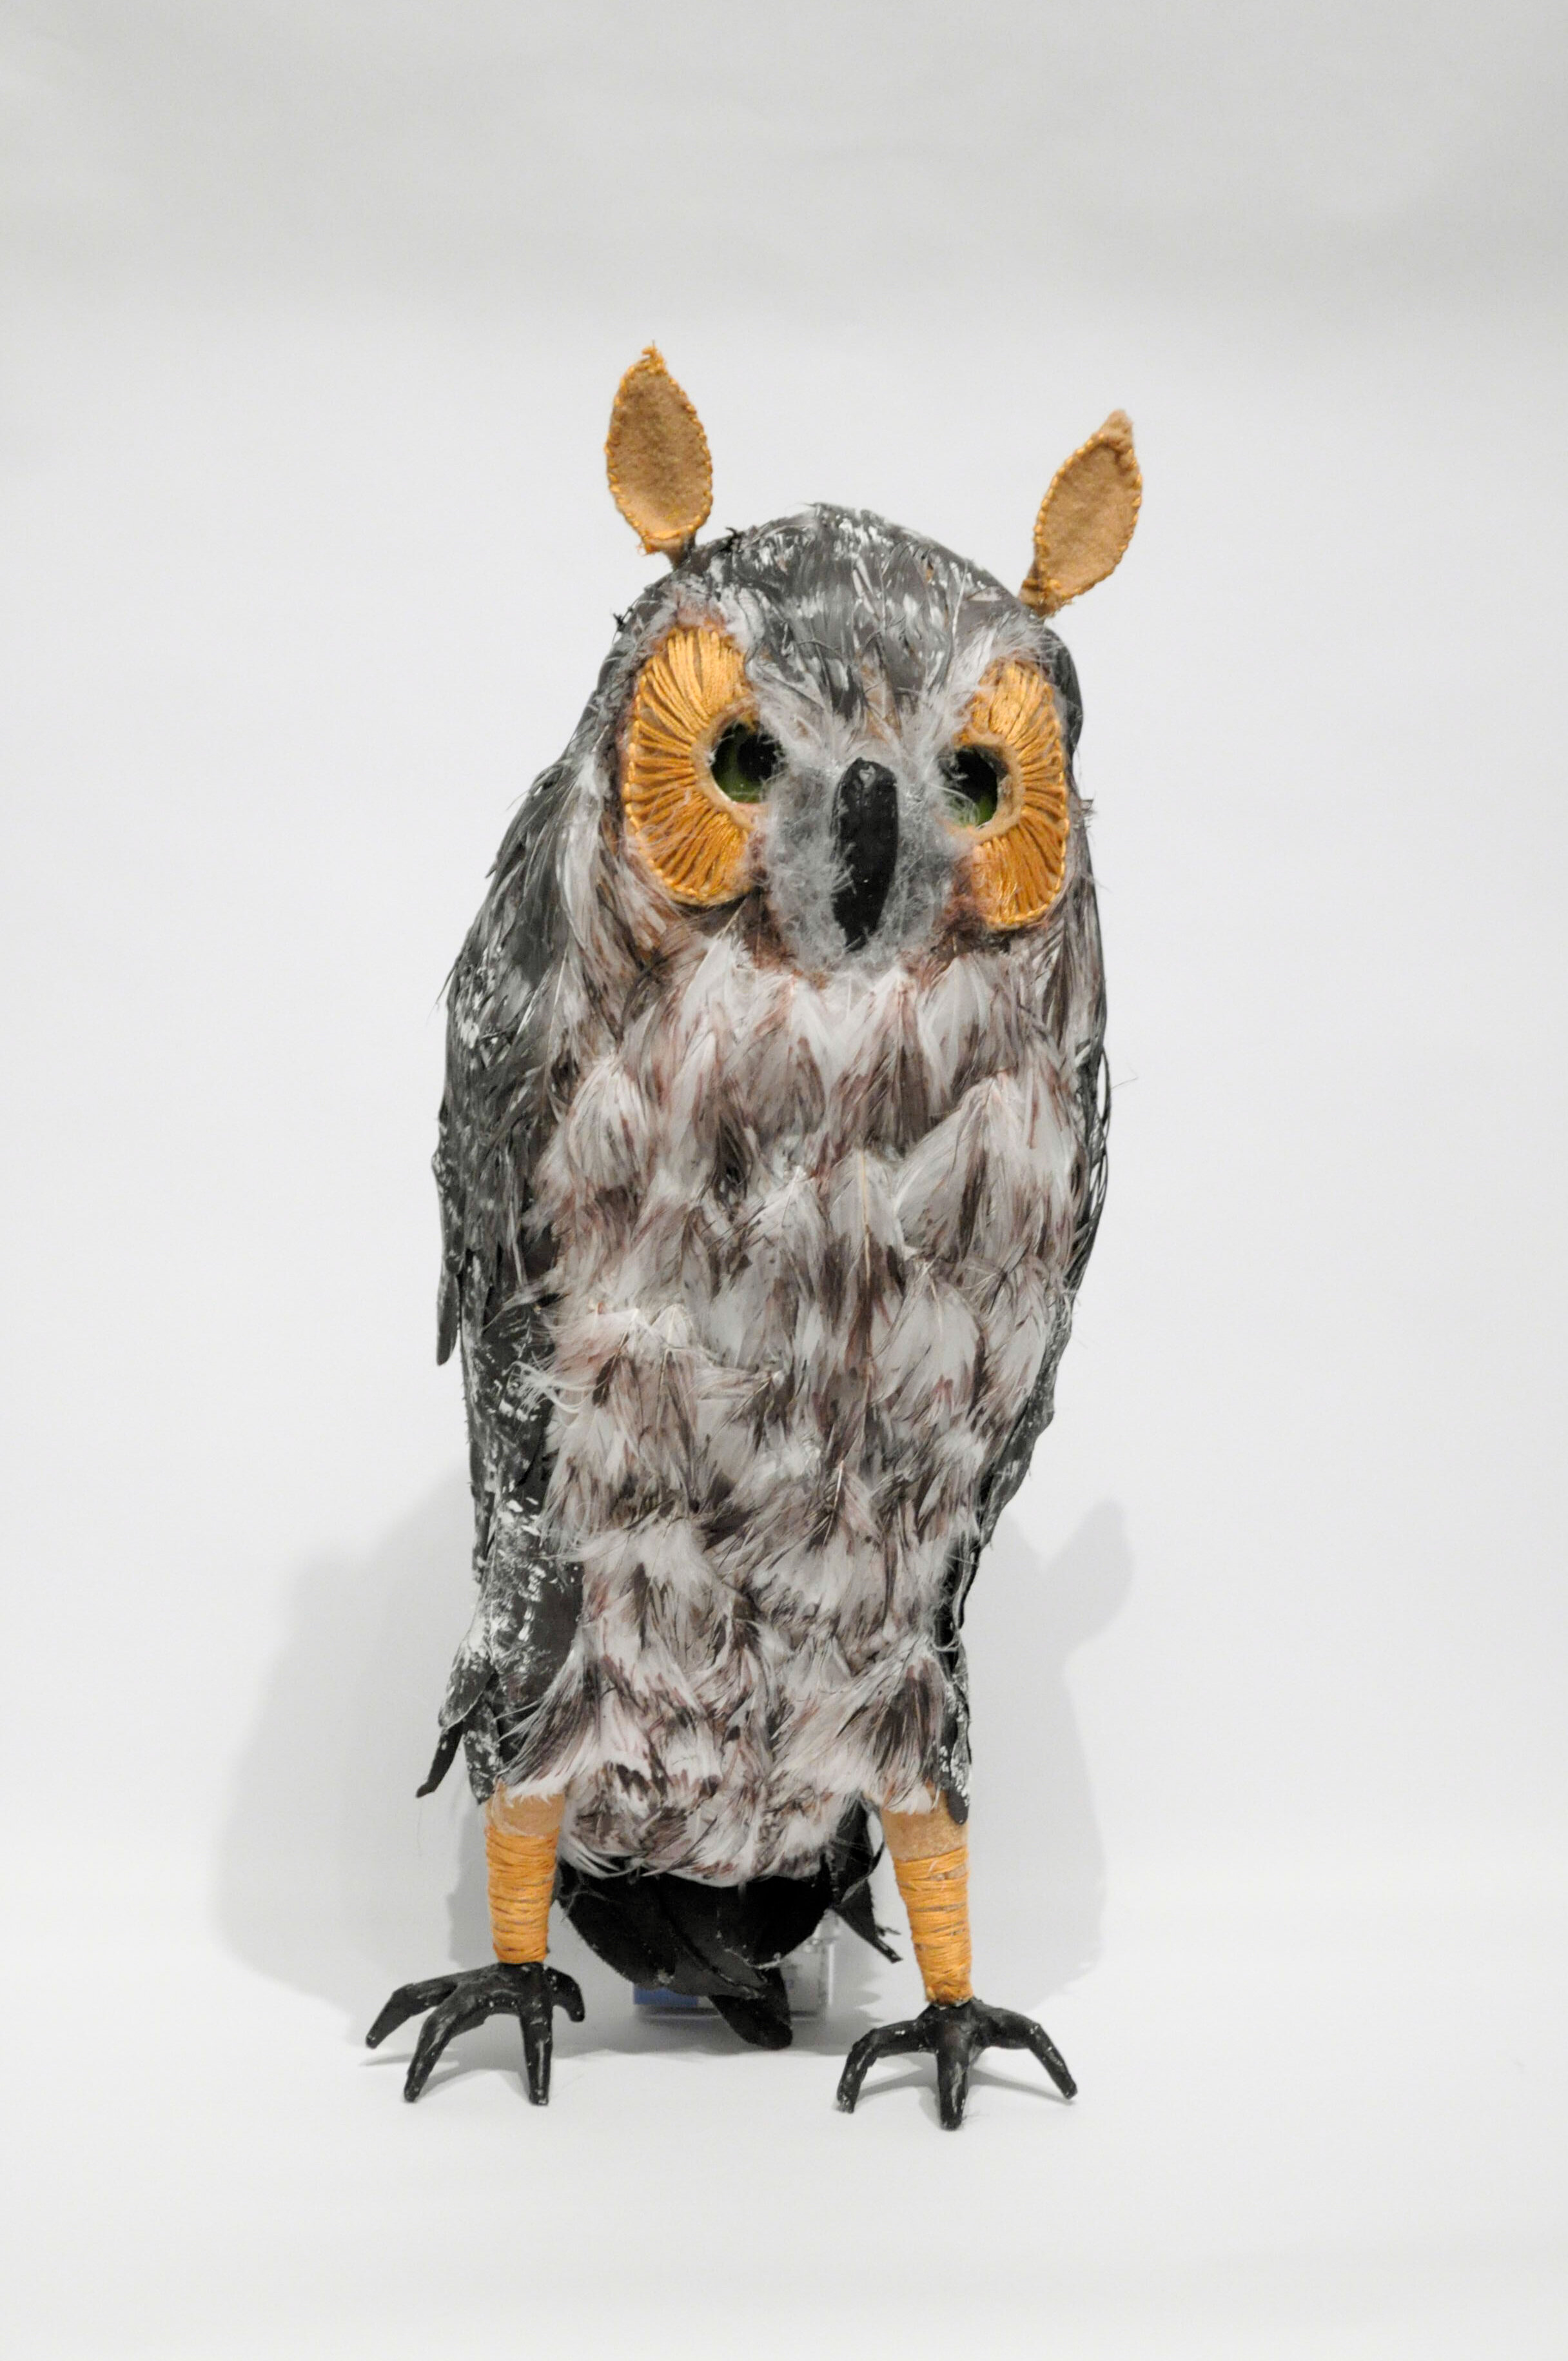  Long-Eared Owl by Sarah Moroney  